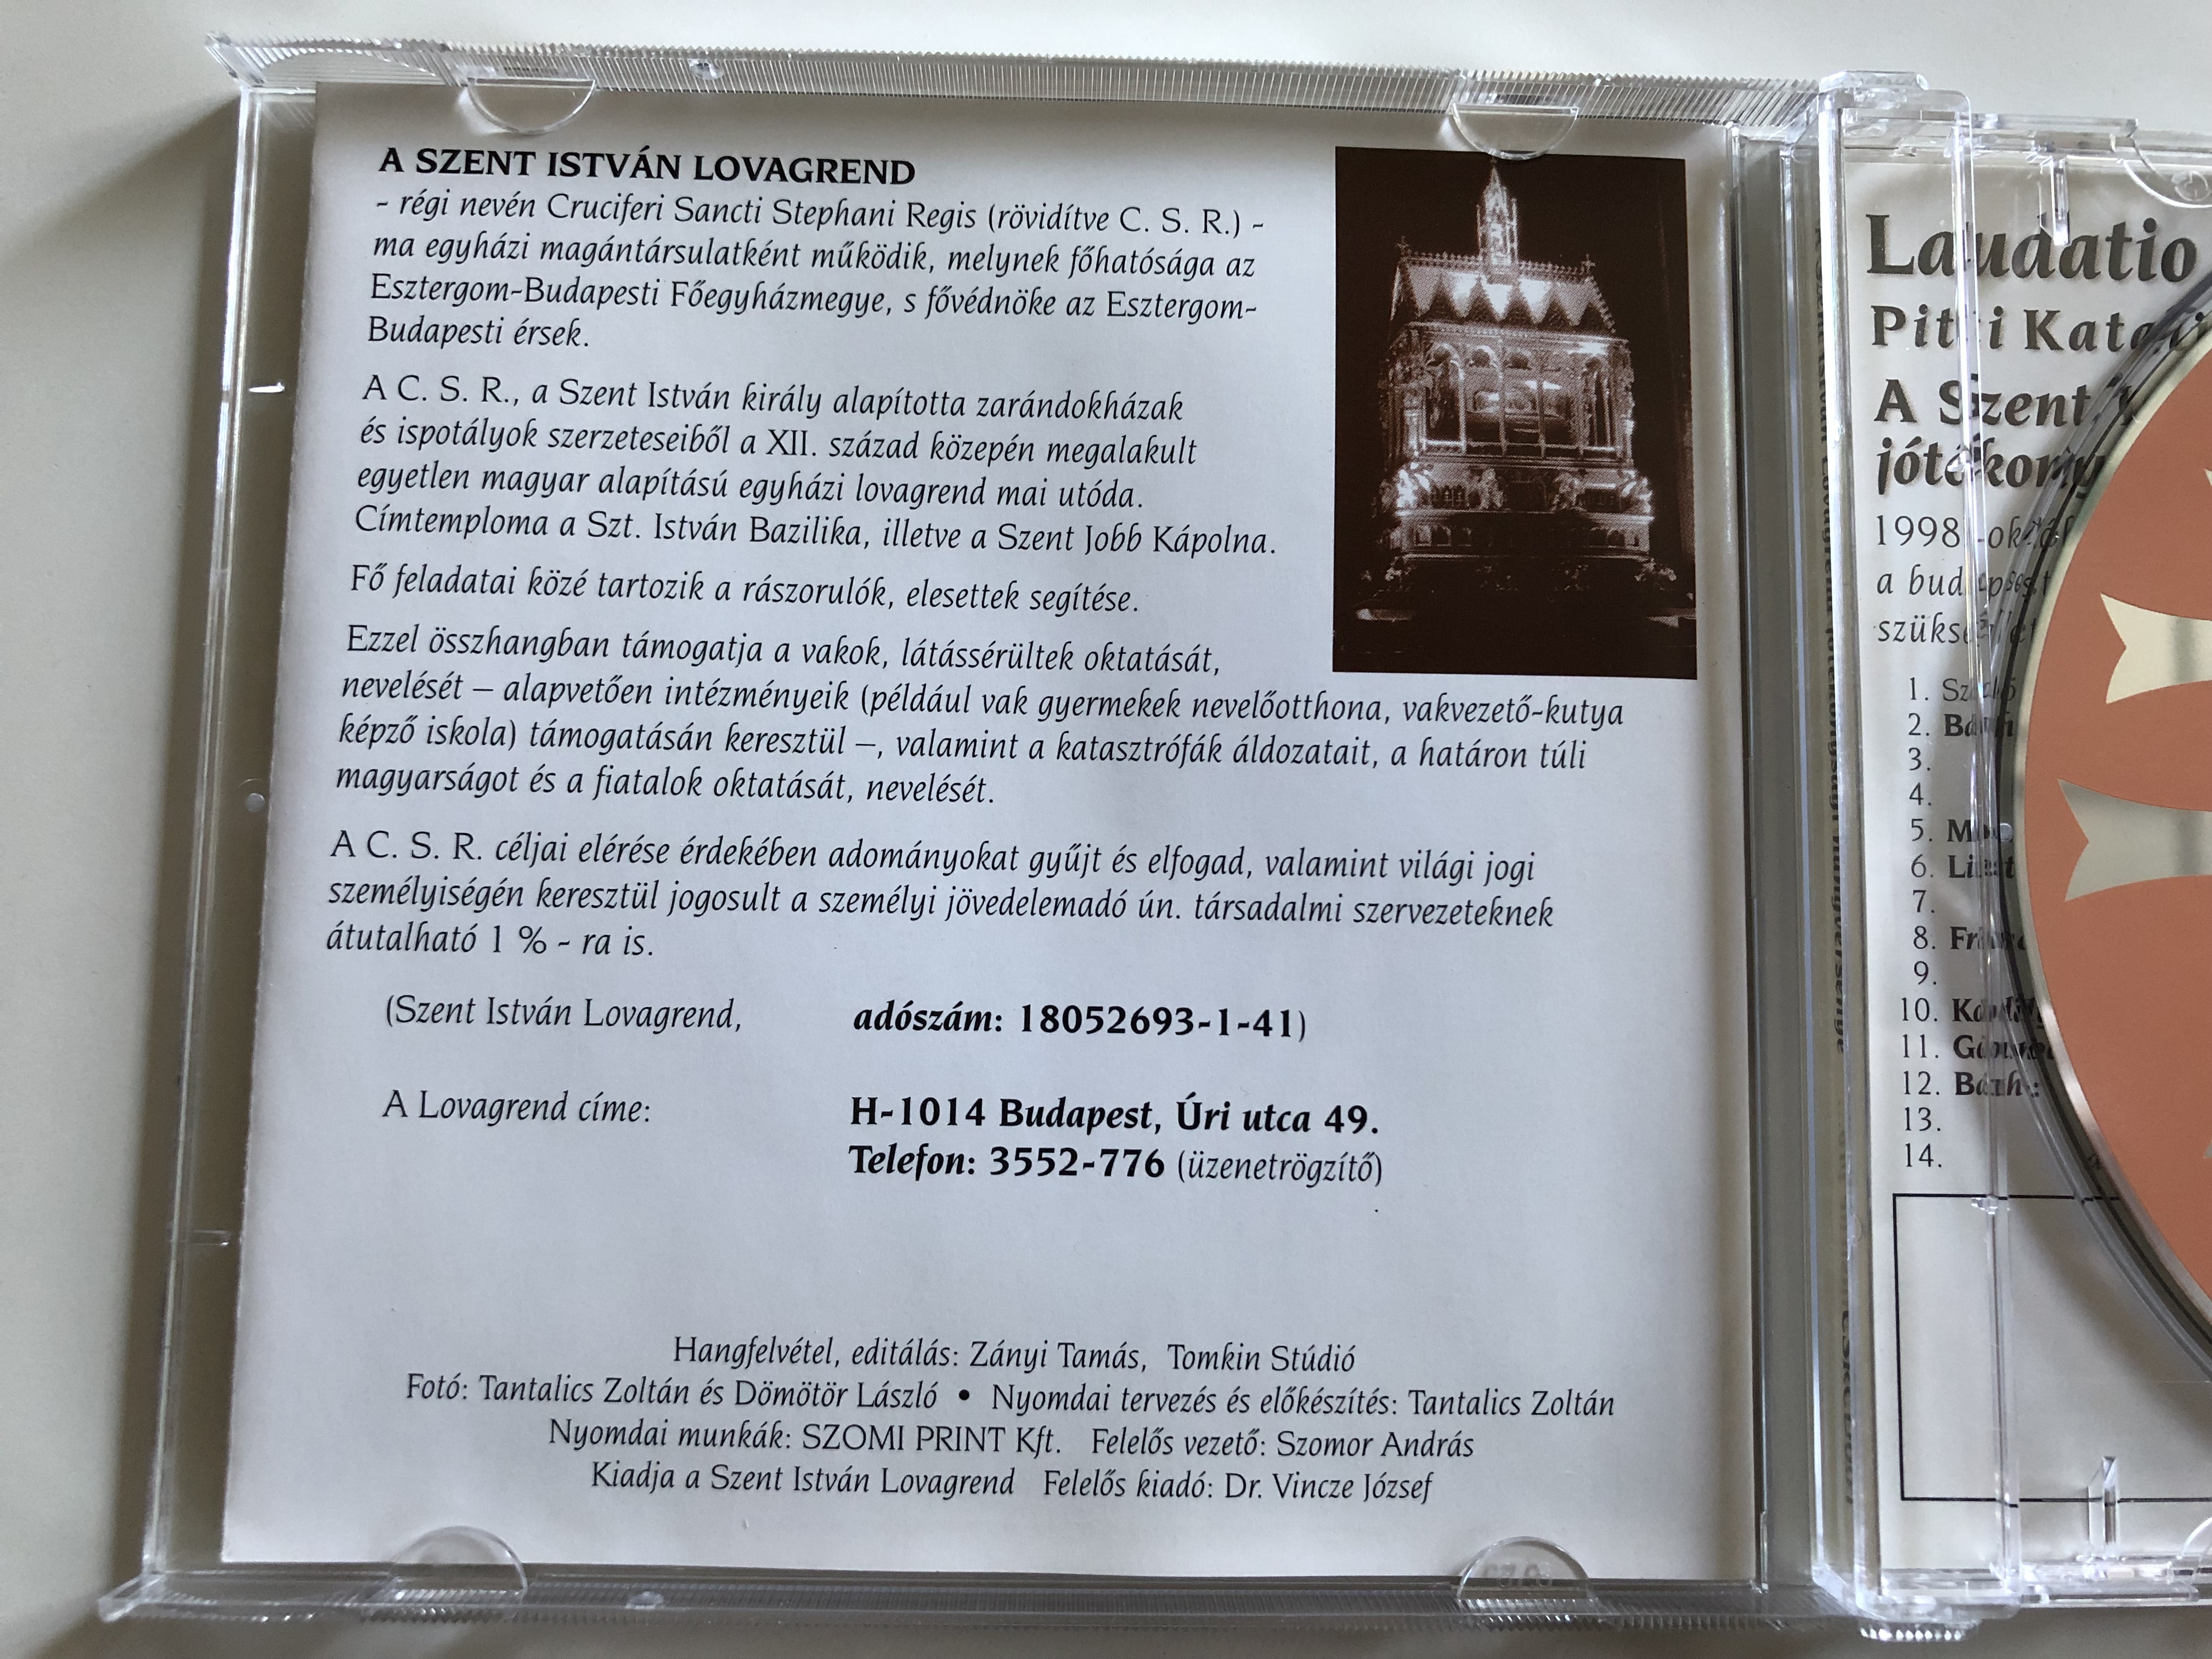 laudatio-musicae-pro...-pitti-katalin-viragh-andras-vtcd-audio-cd-1999-csrcd001-8-.jpg